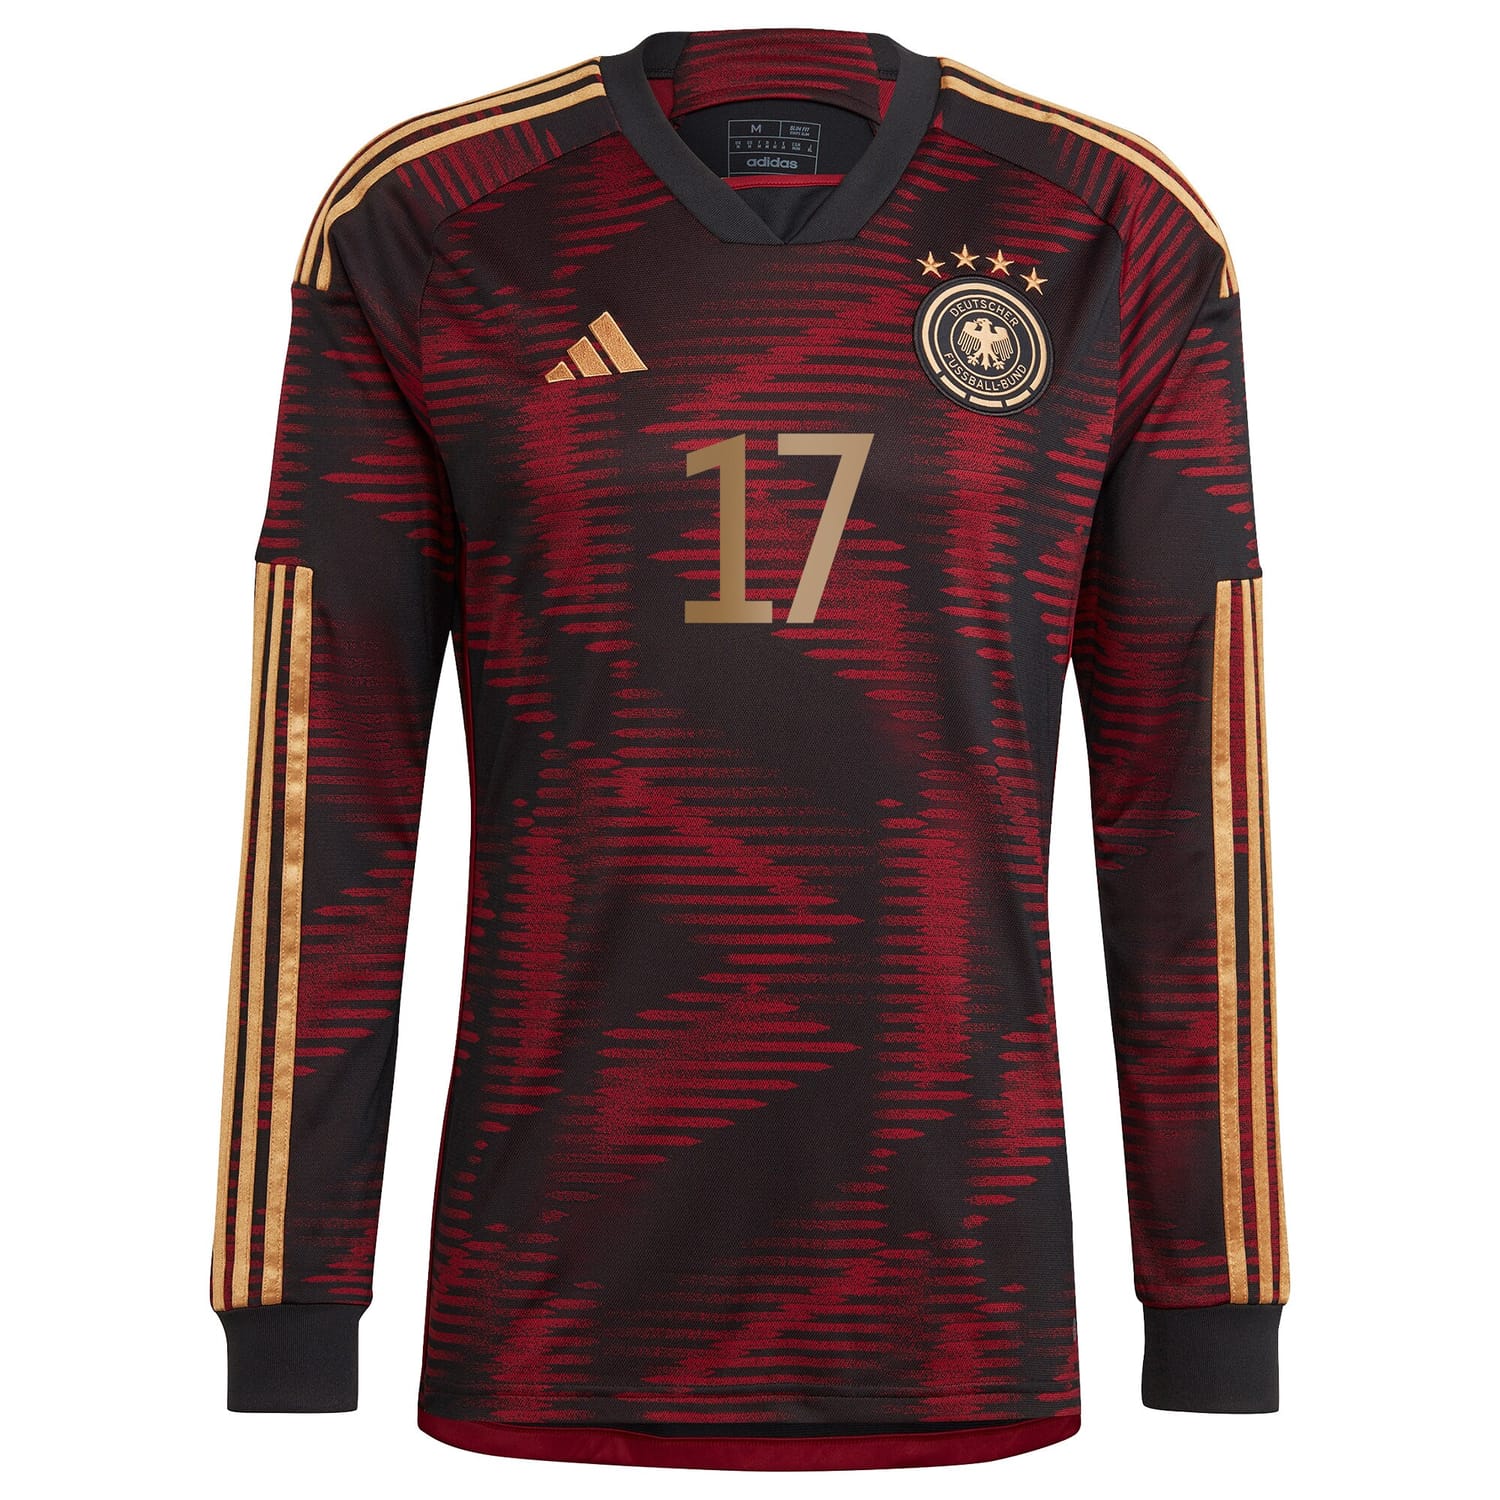 Germany National Team Away Jersey Shirt Long Sleeve 2022 player Julian Brandt 17 printing for Men